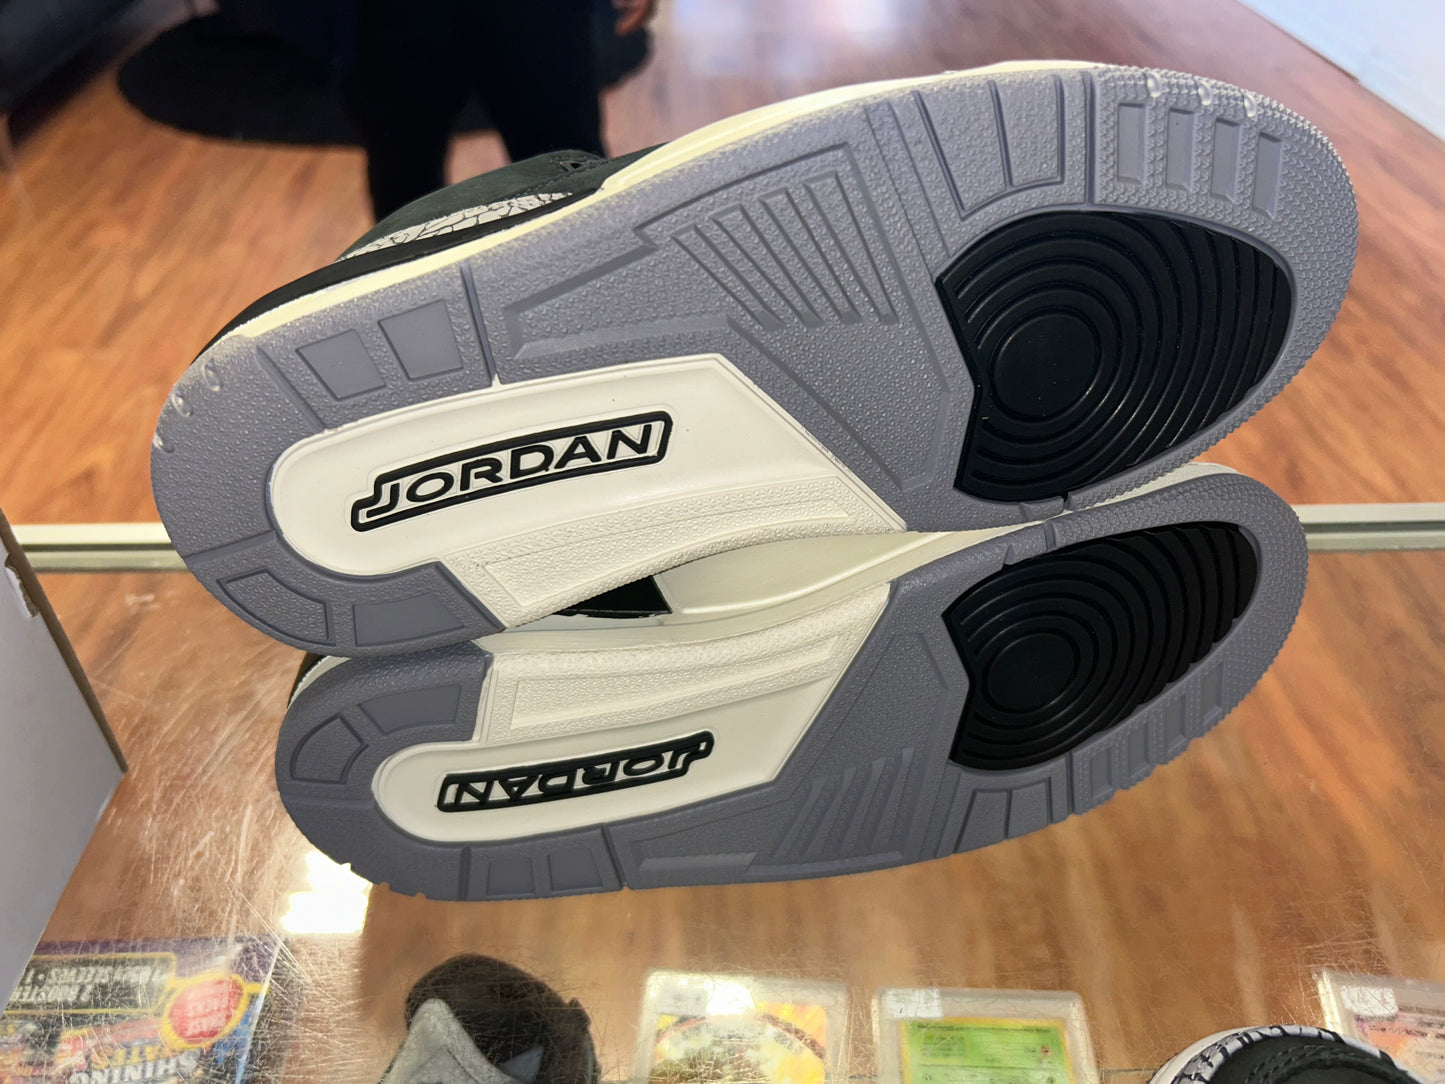 Size 5.5 (7W) Air Jordan 3 “Off Noir” Brand New (MAMO)